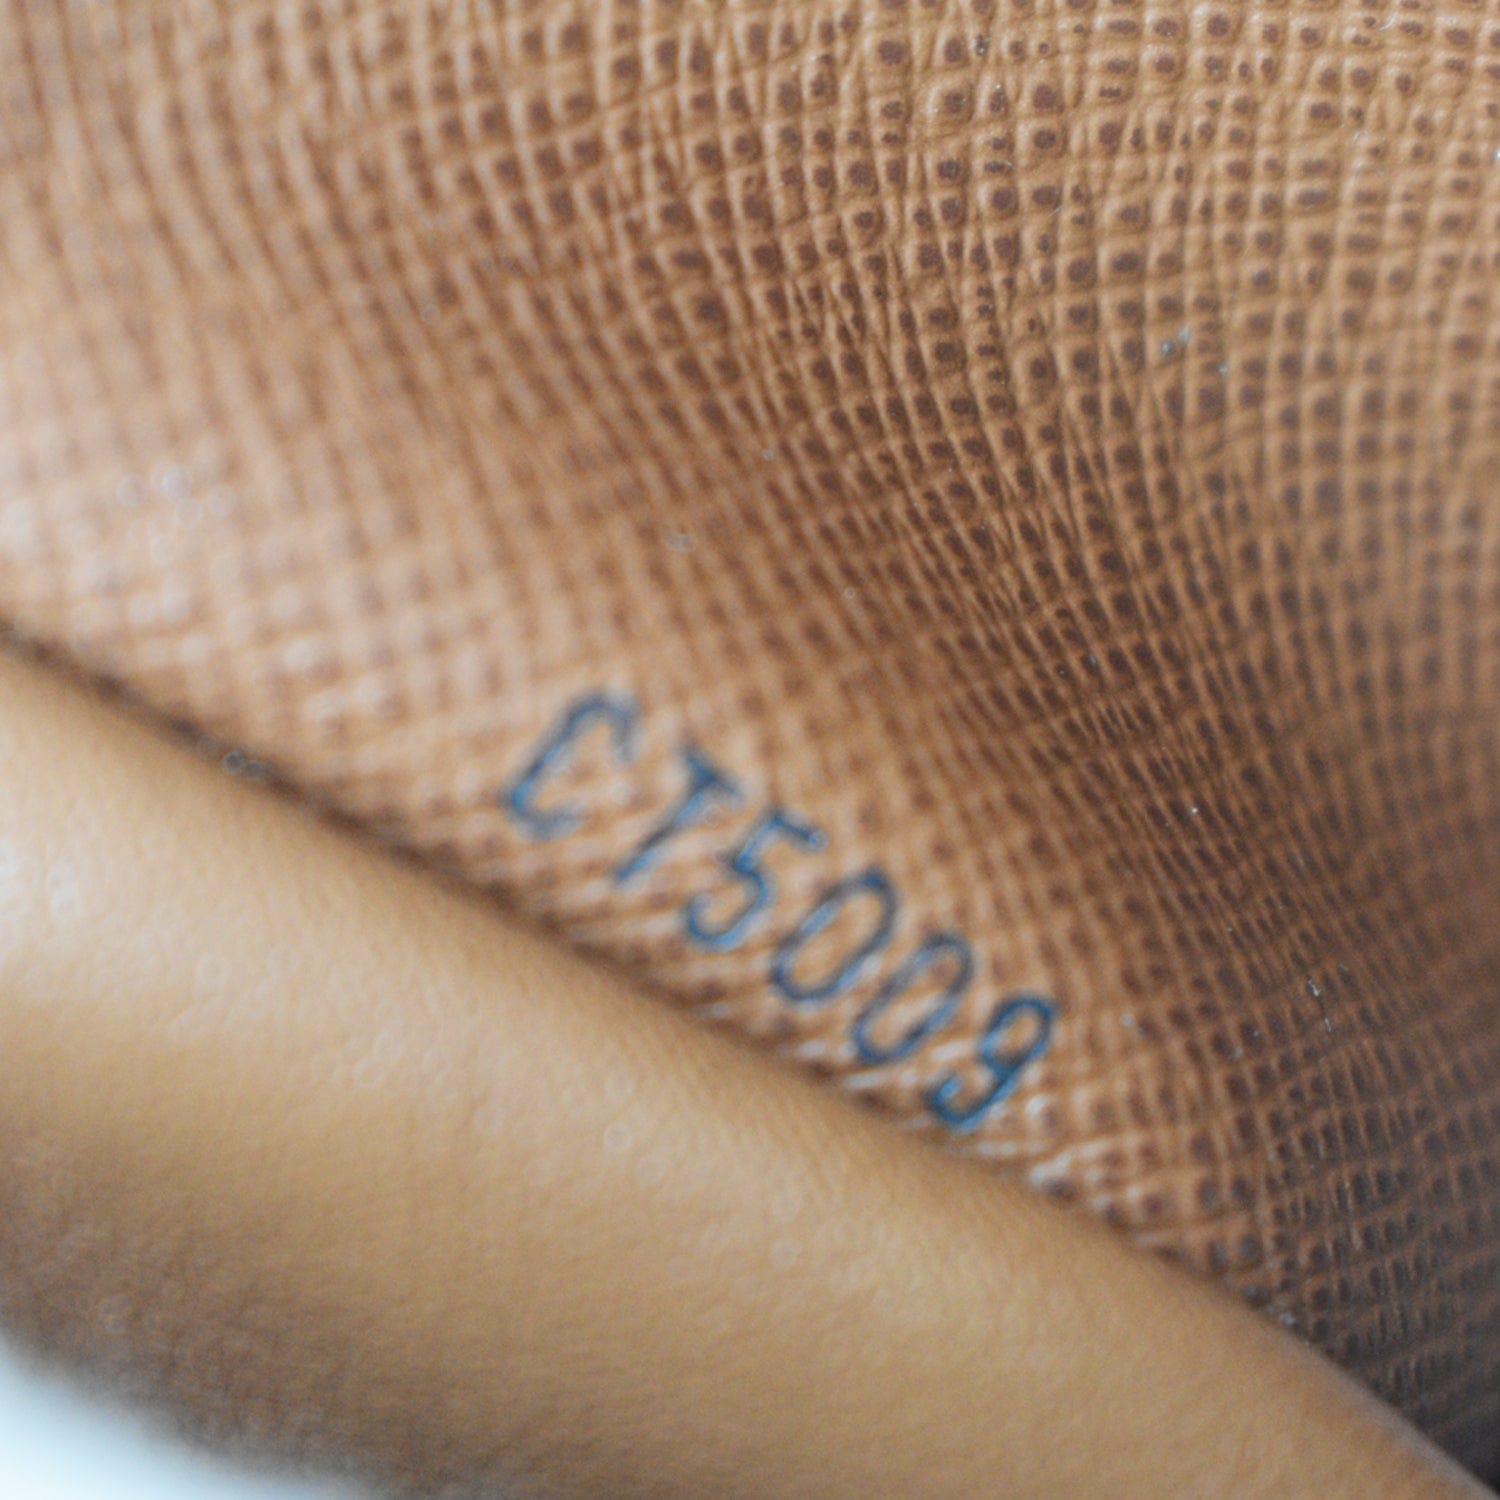 6 Reasons to Shop Vintage Louis Vuitton